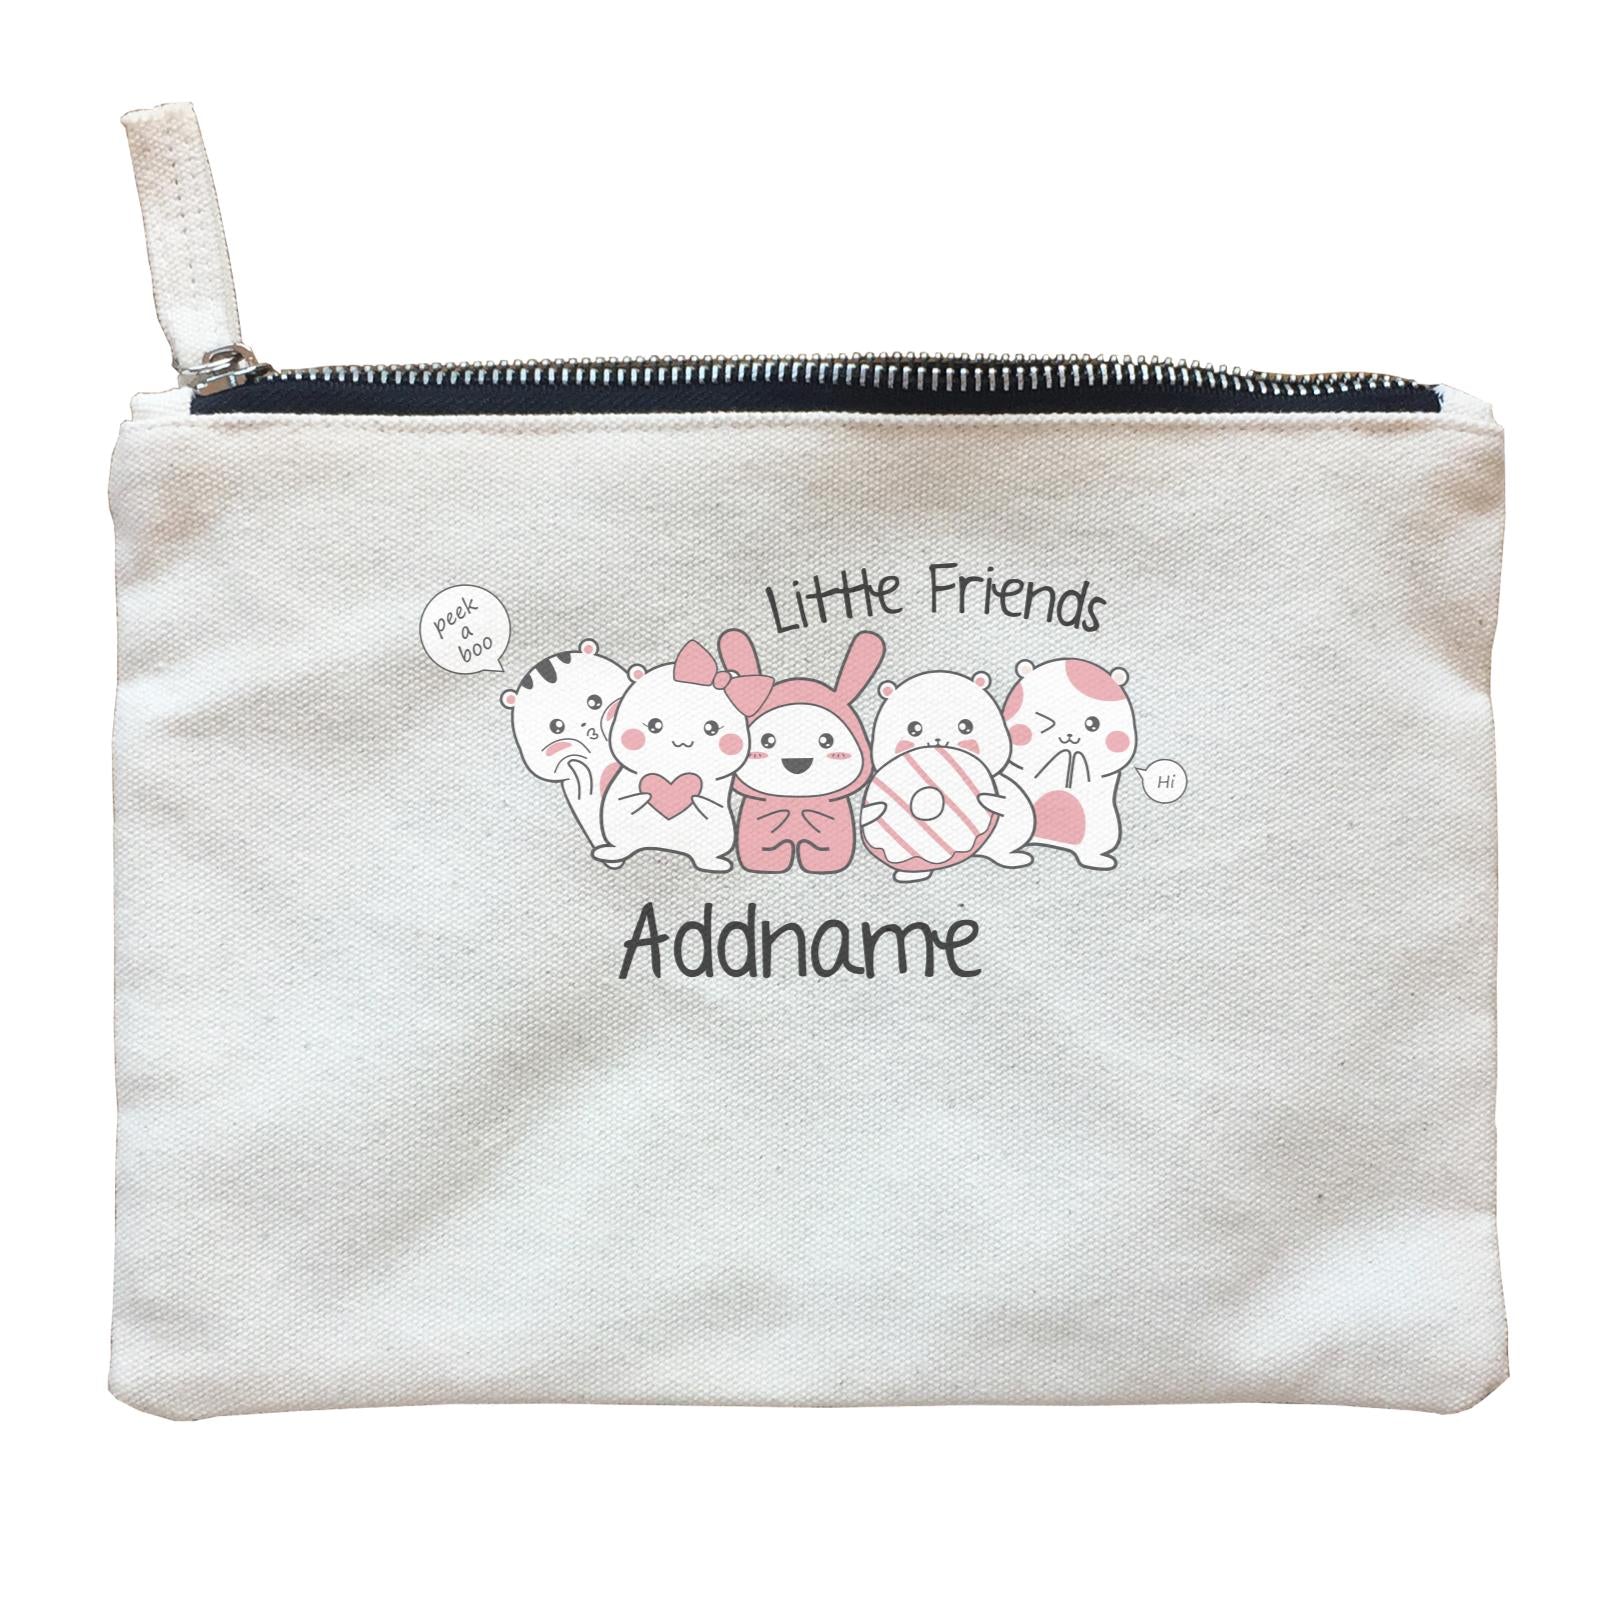 Cute Animals And Friends Series Cute Hamster Little Friends Addname Zipper Pouch